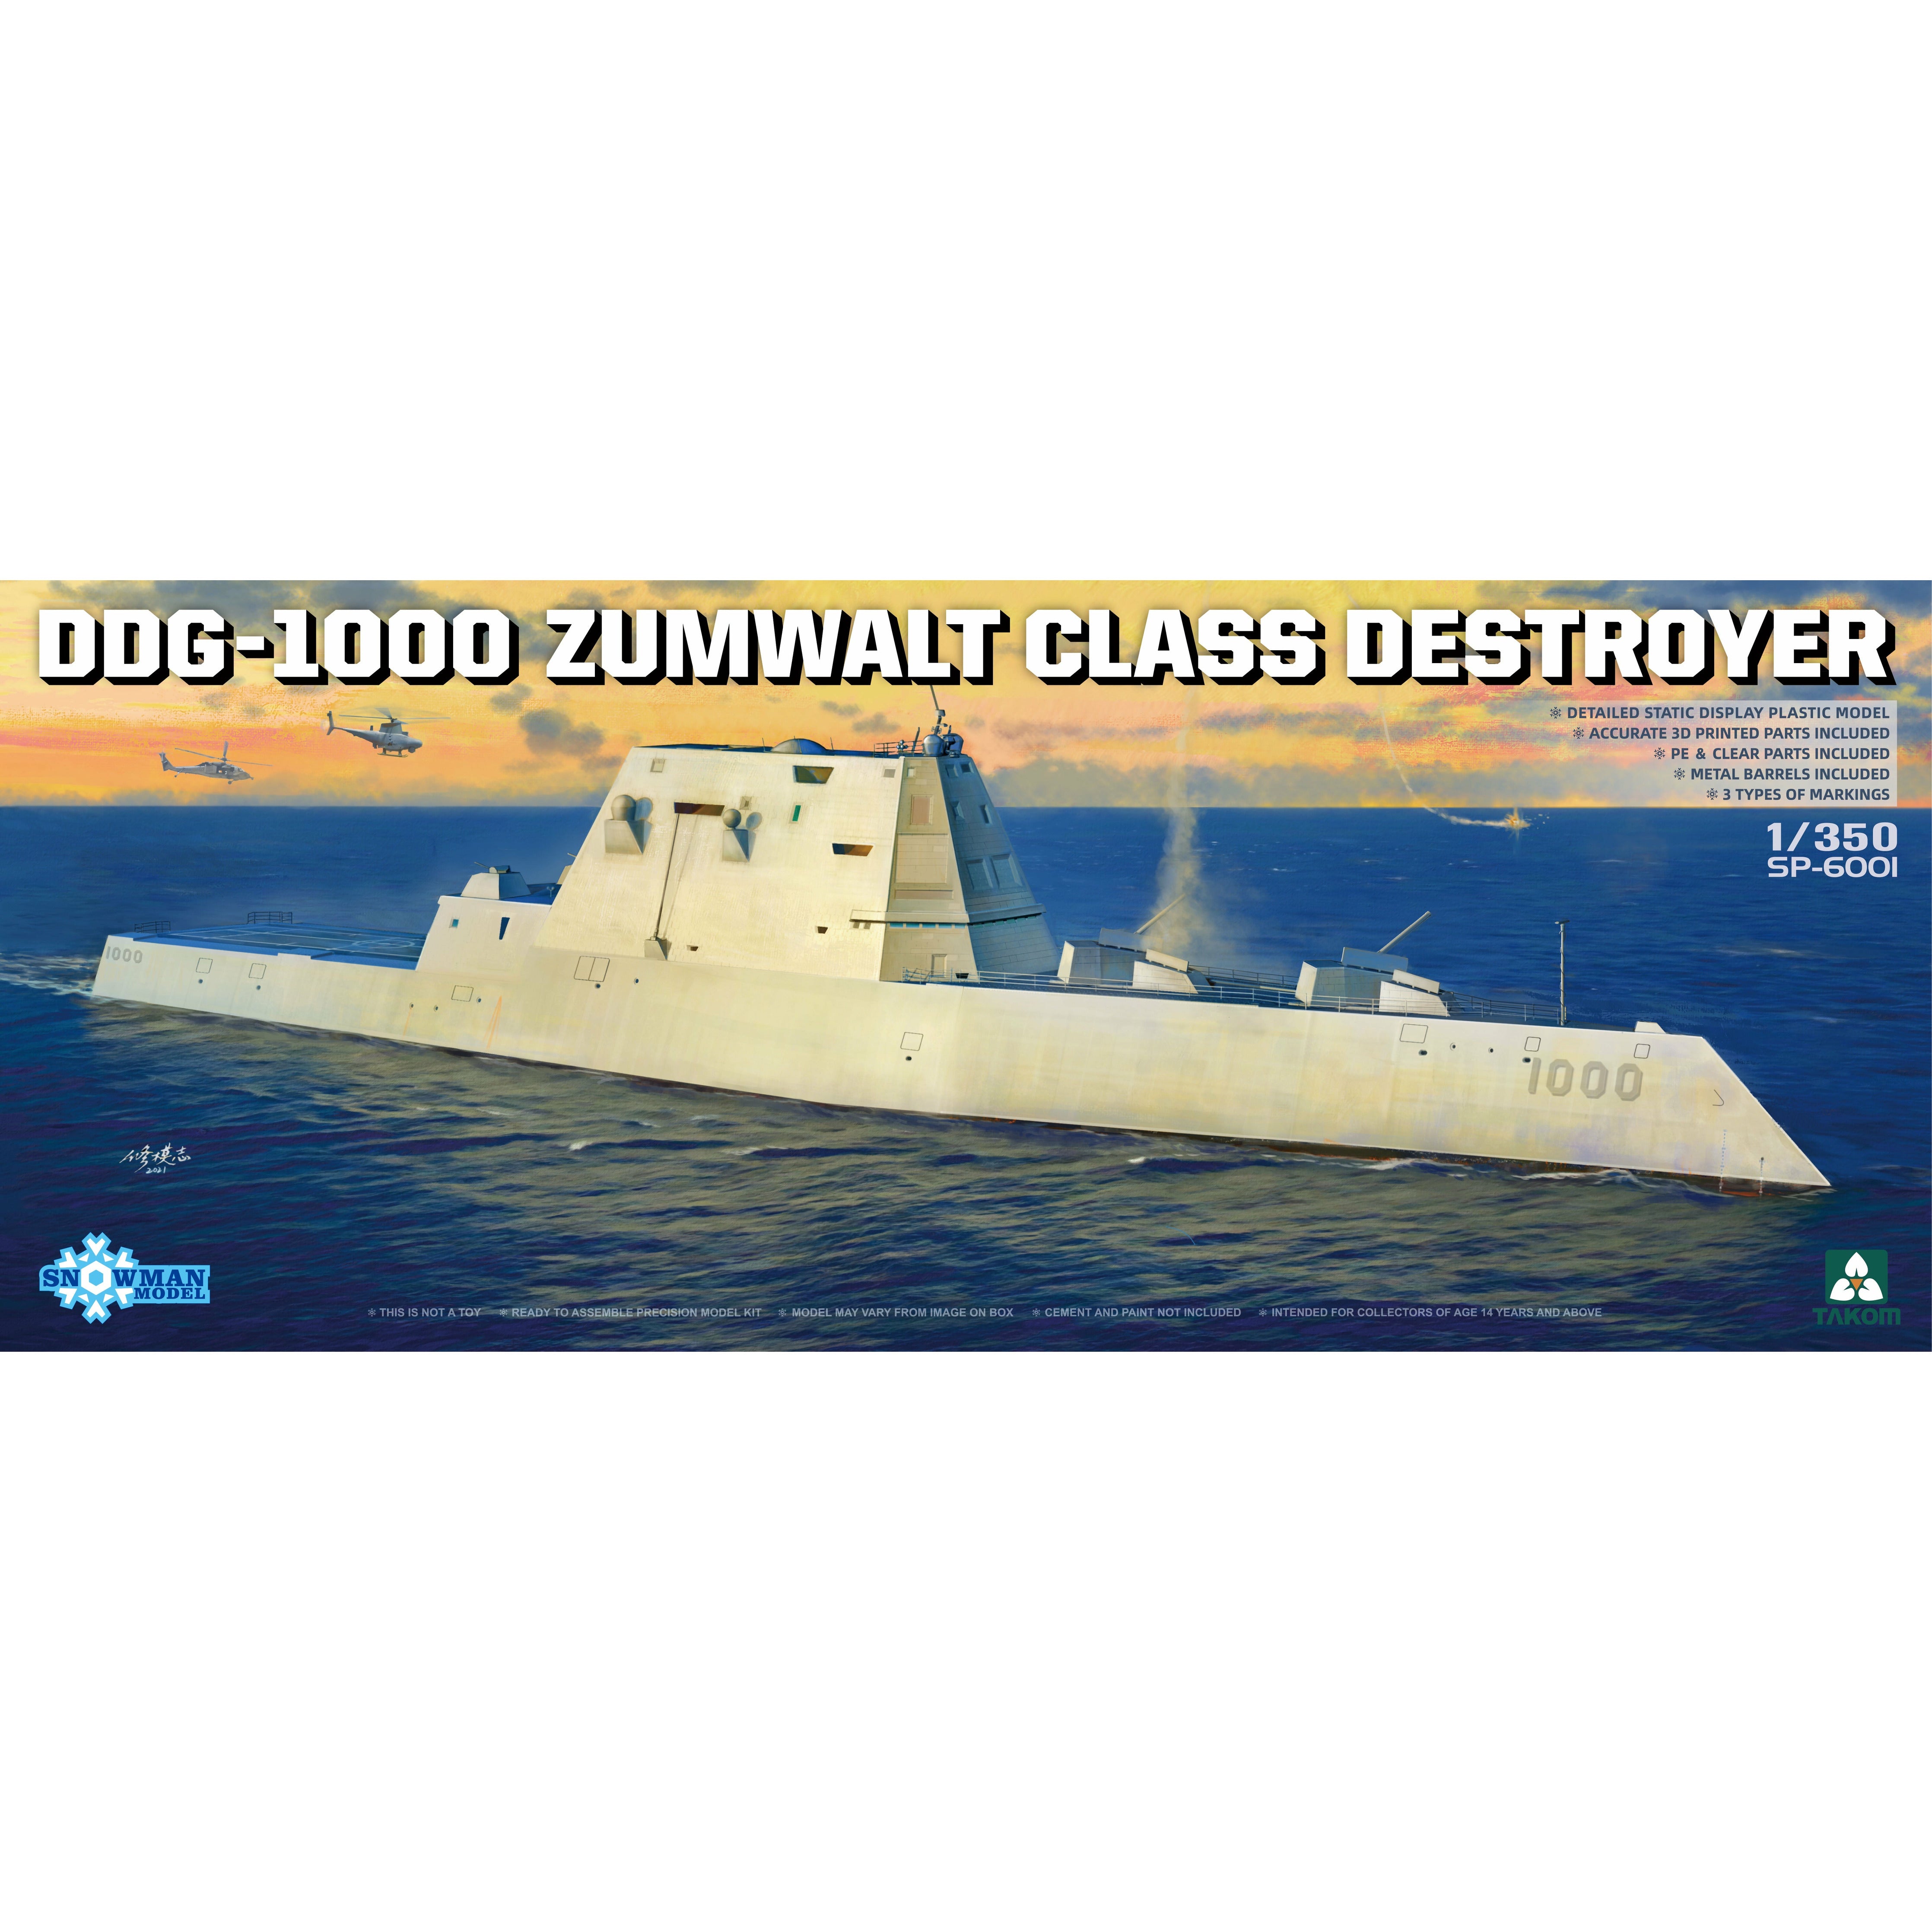 DDG-1000 Zumwalt Class Destroyer 1/350 Model Ship Kit #6001 by Takom